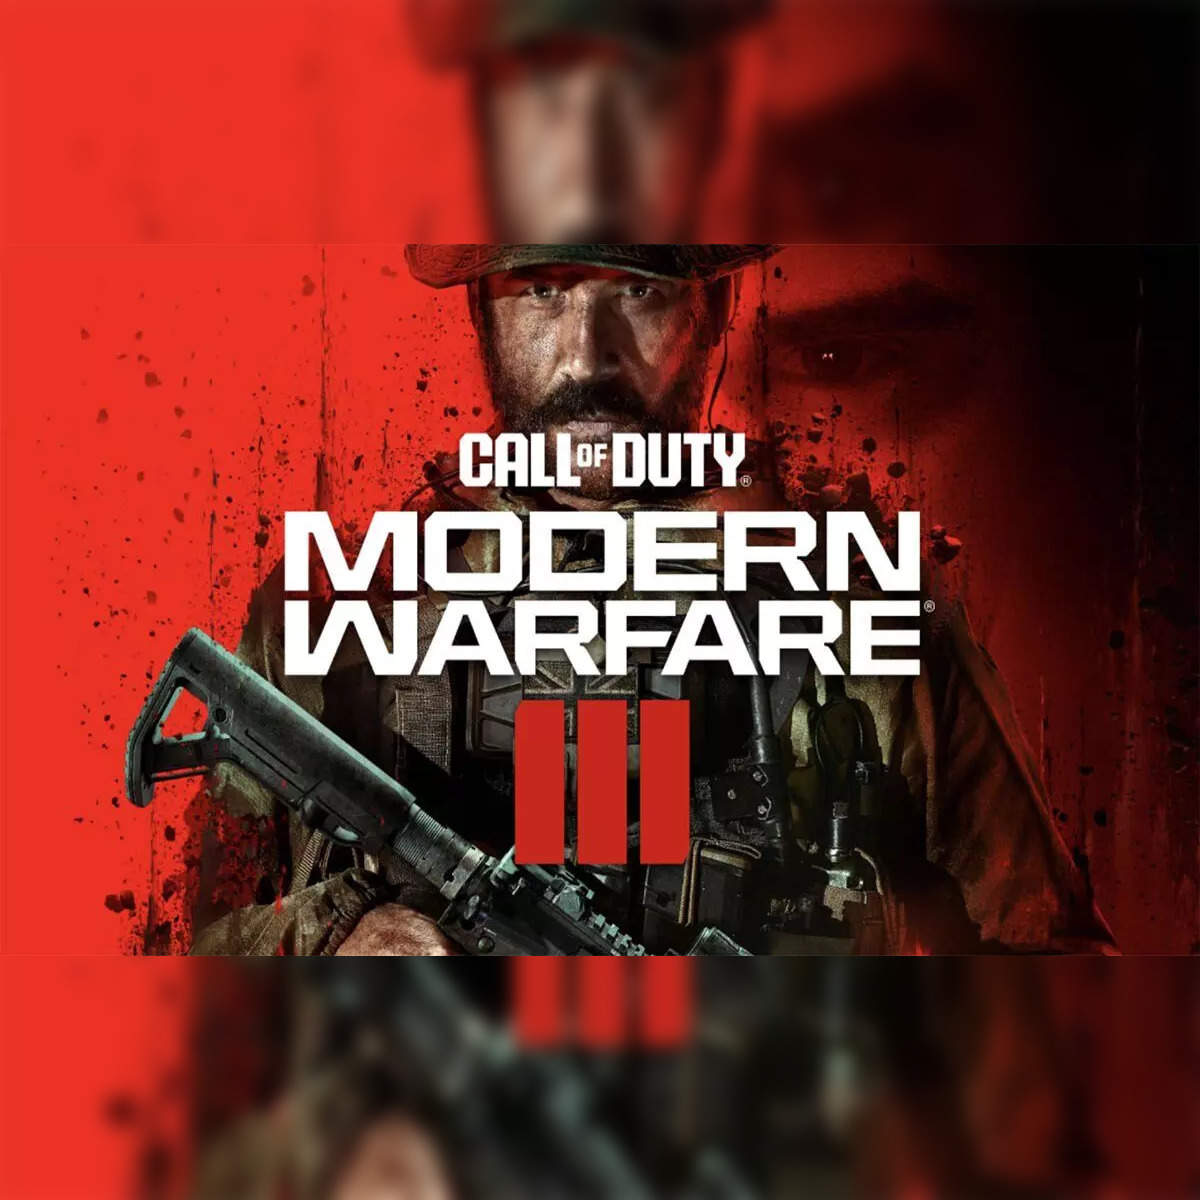 Call of Duty Modern Warfare III Gameplay Trailer